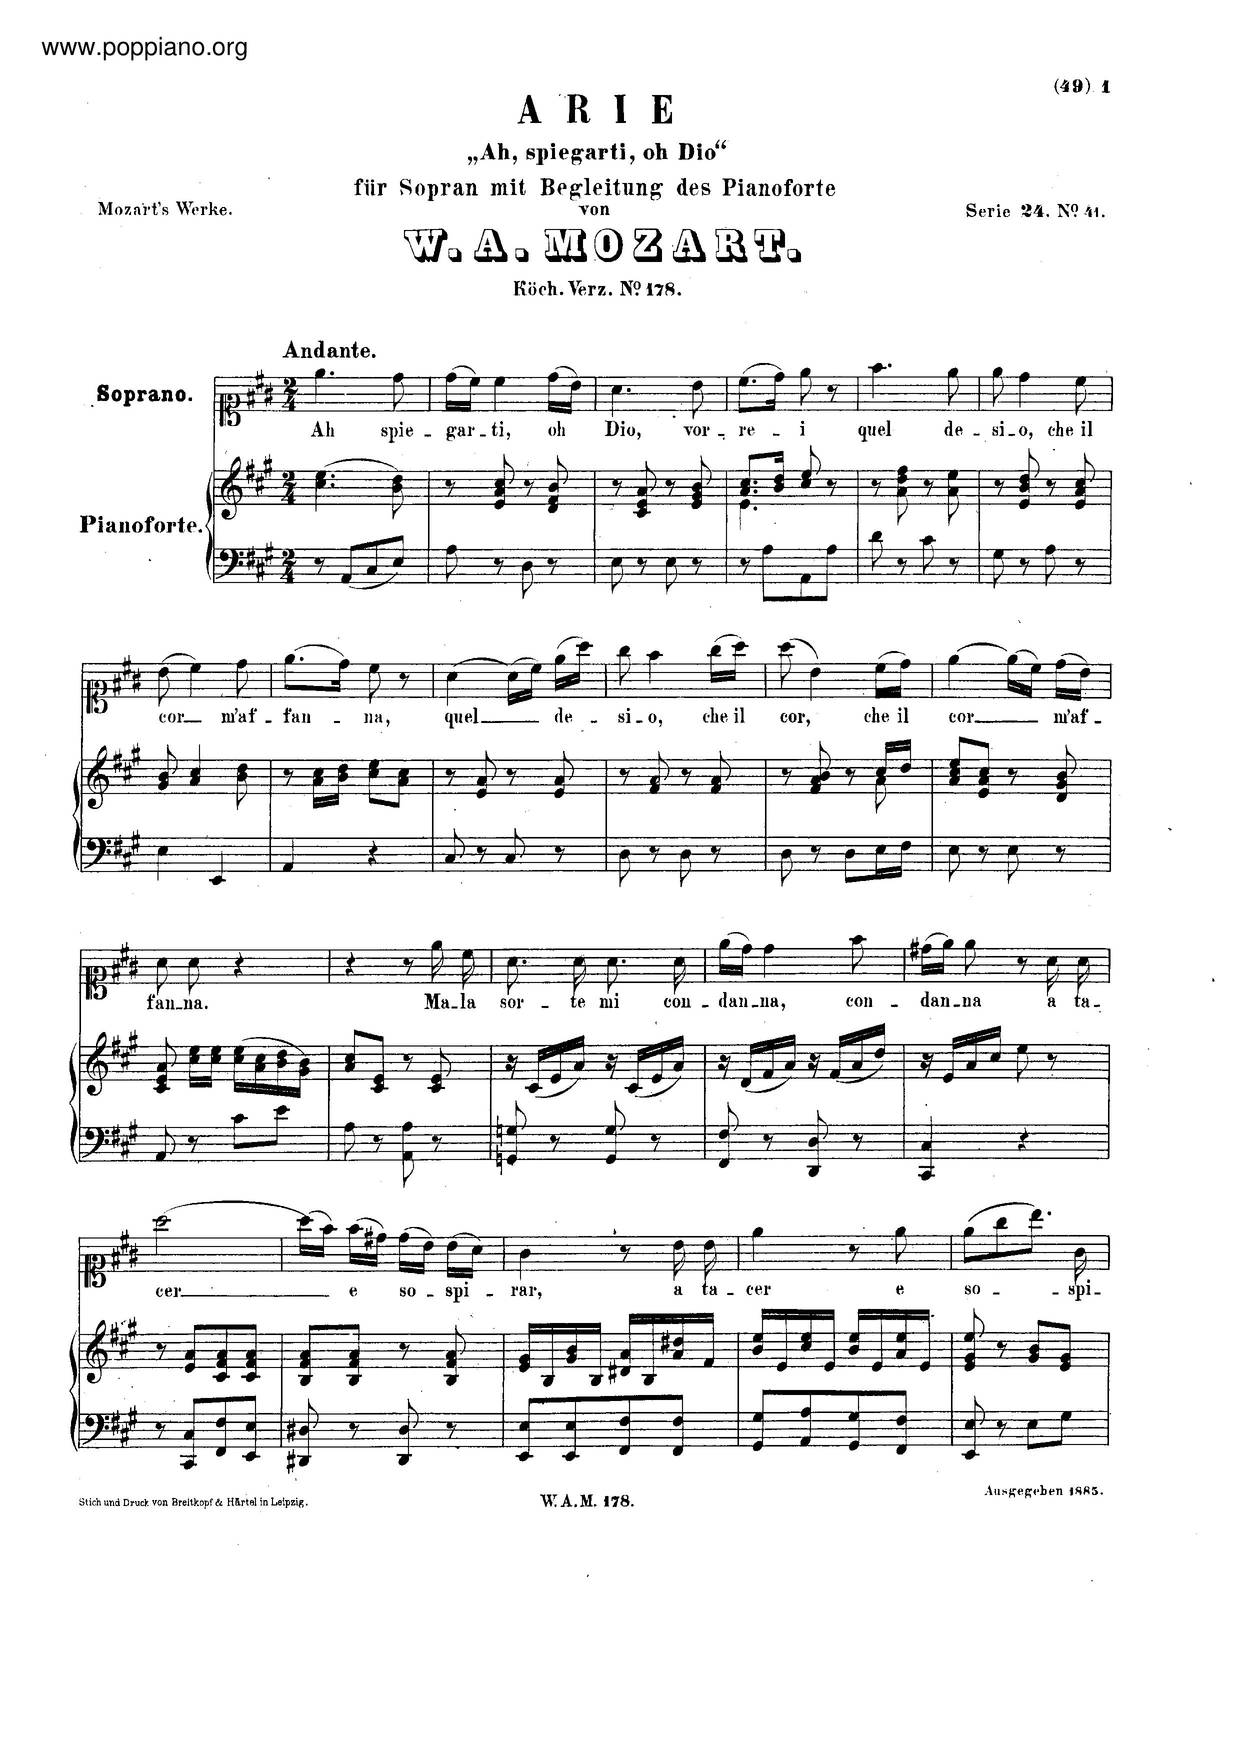 Ah, Spiegarti, O Dio, K. 178/417Eピアノ譜